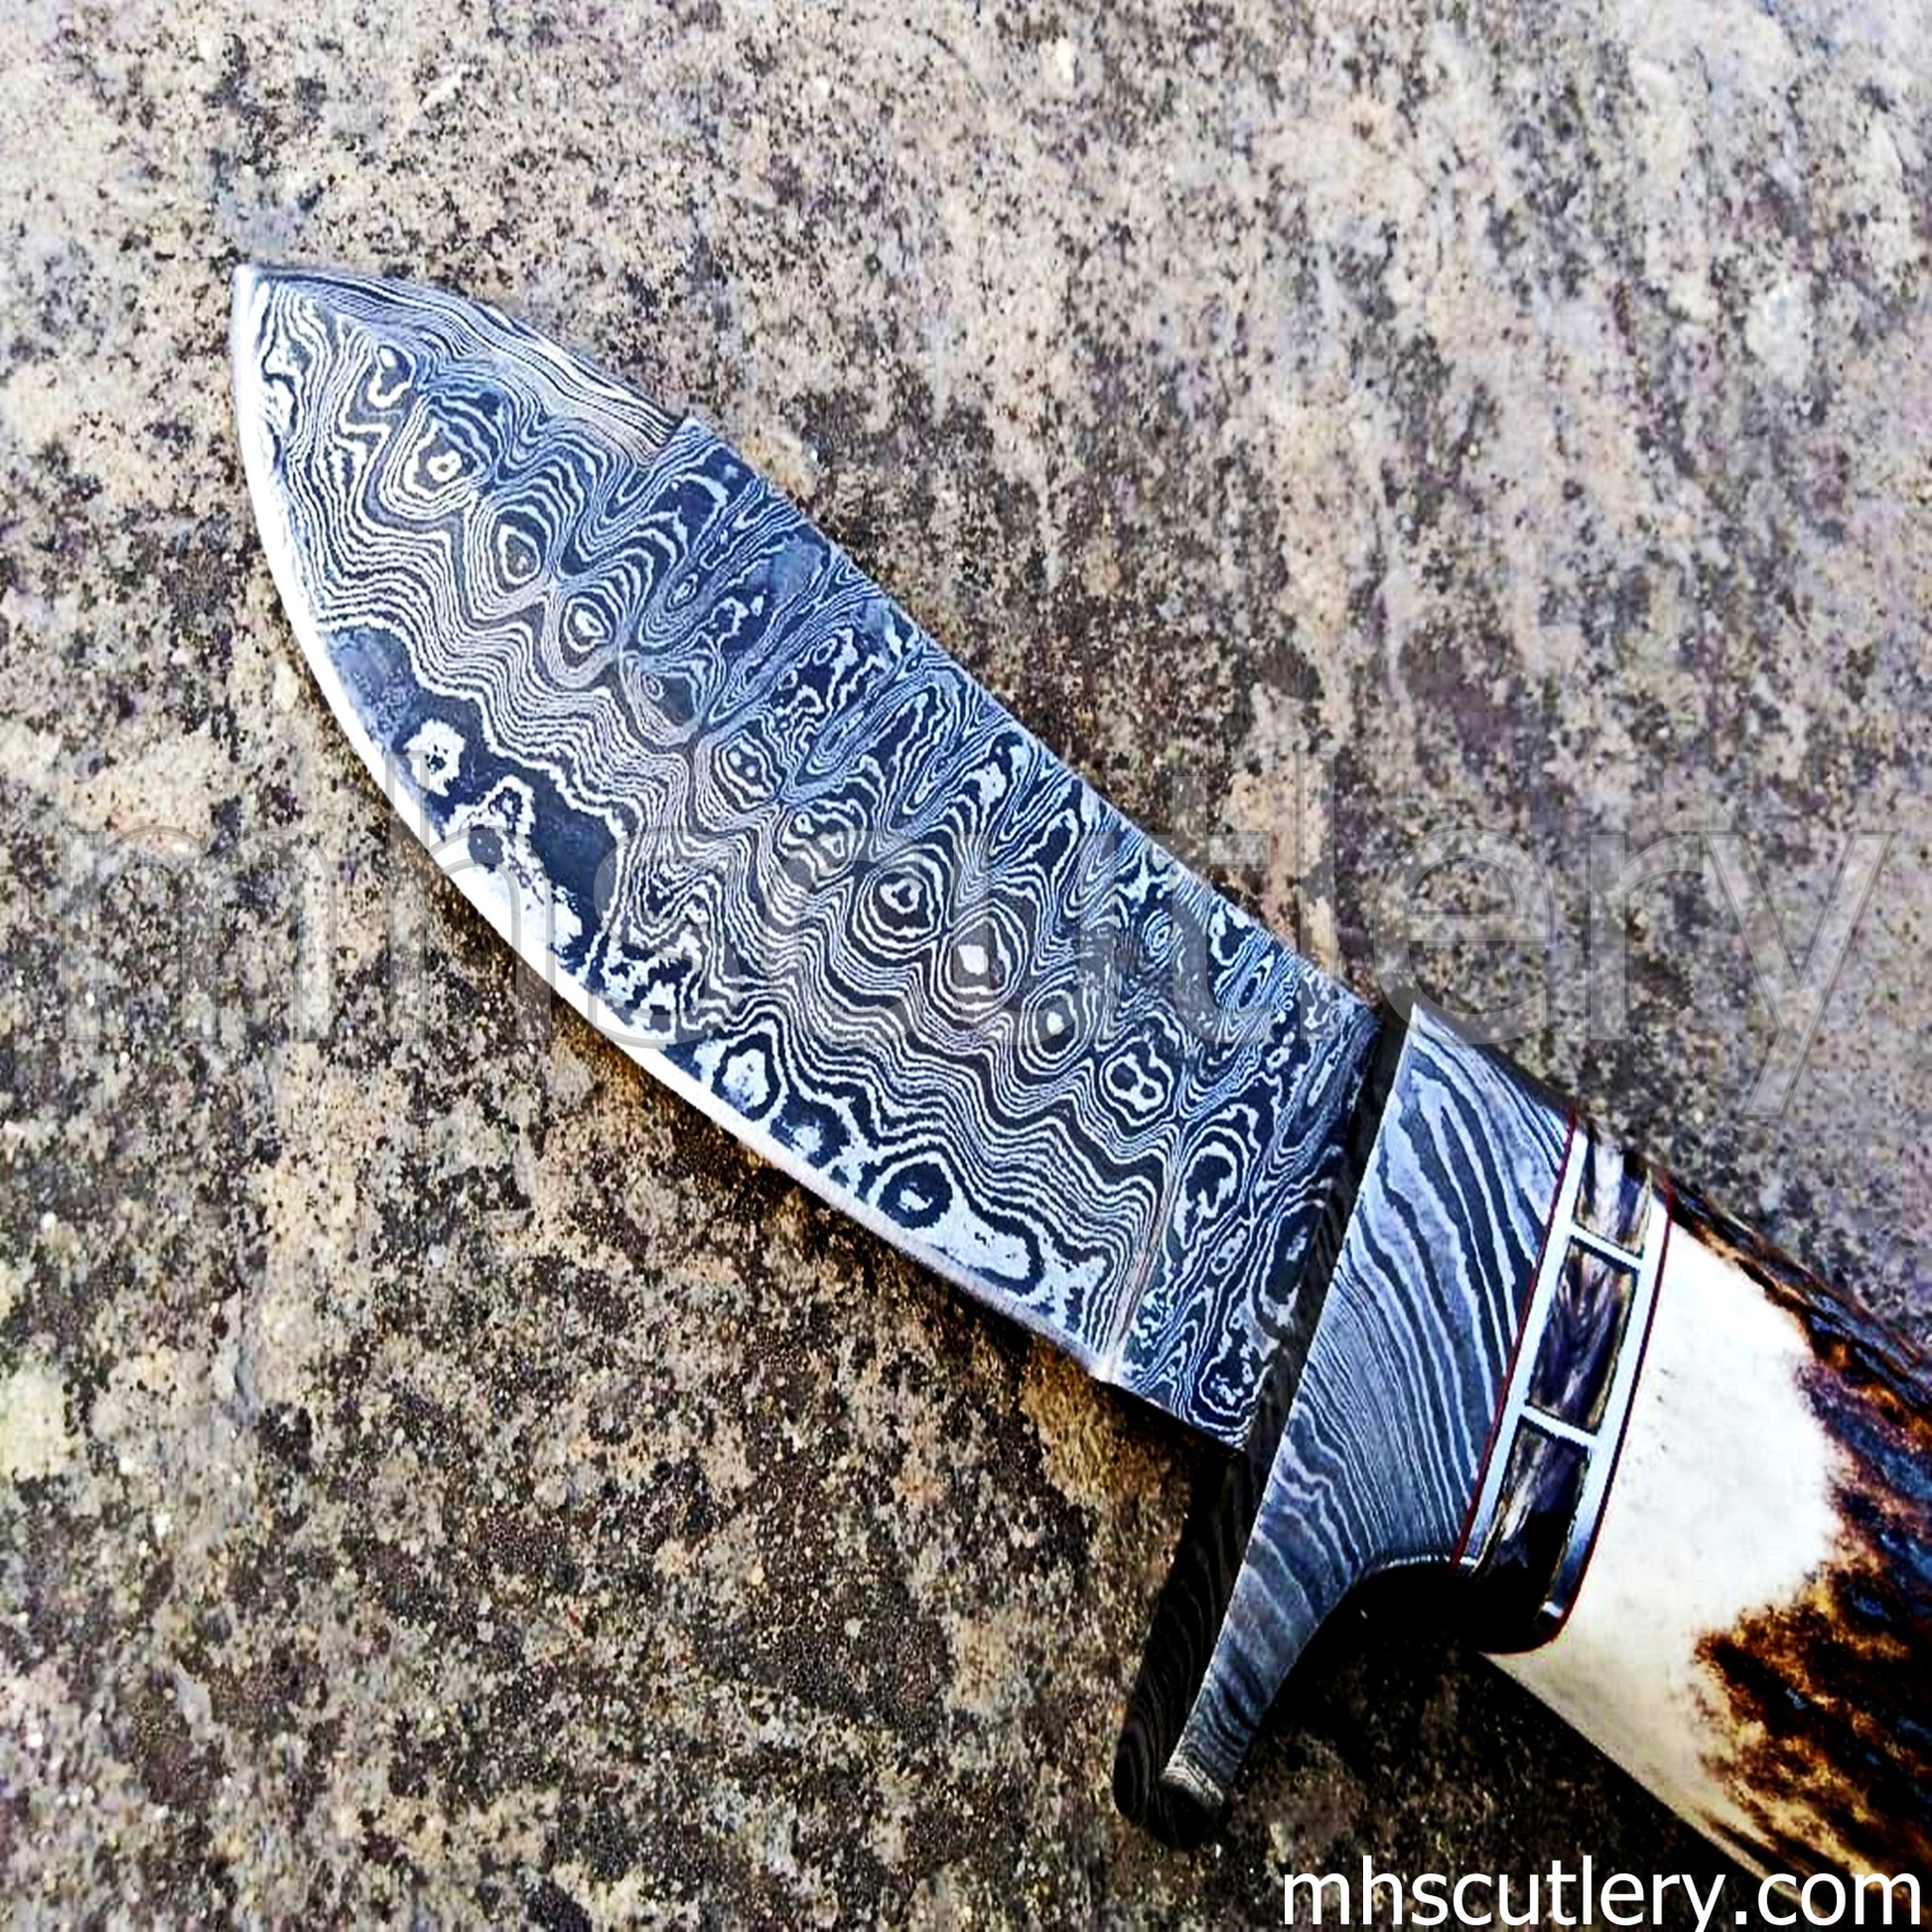 Custom Handmade Raindrop Damascus Steel Antler Hunting Knife | mhscutlery